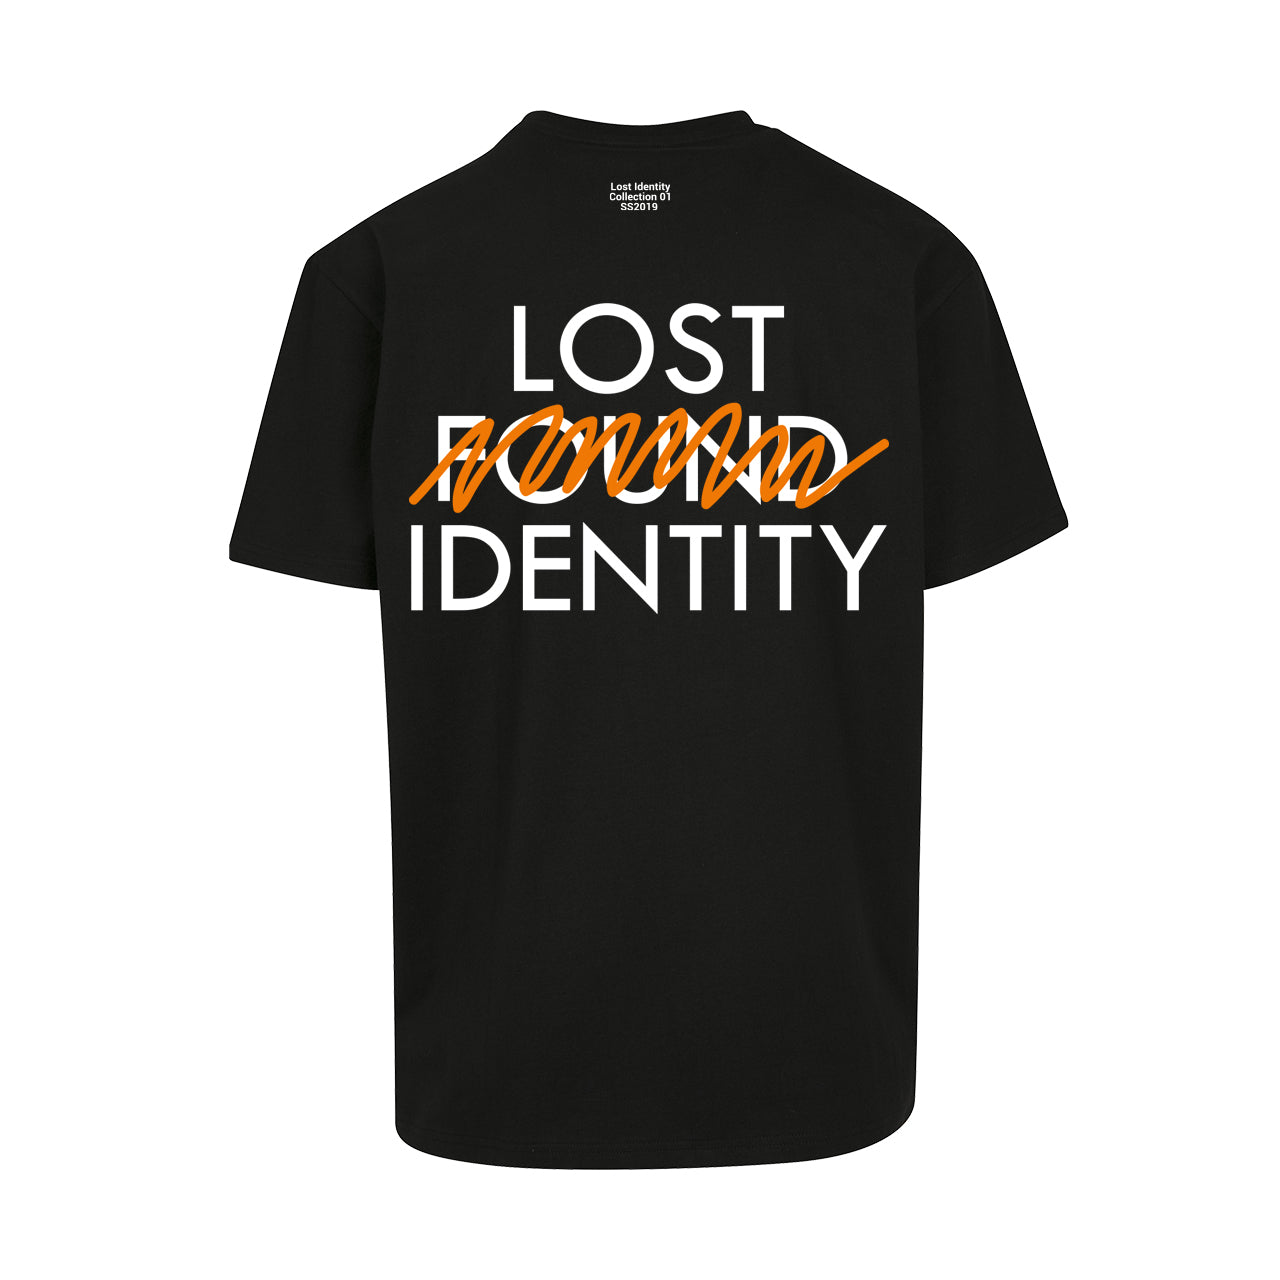 Lost Identity - Lost Found Shirt